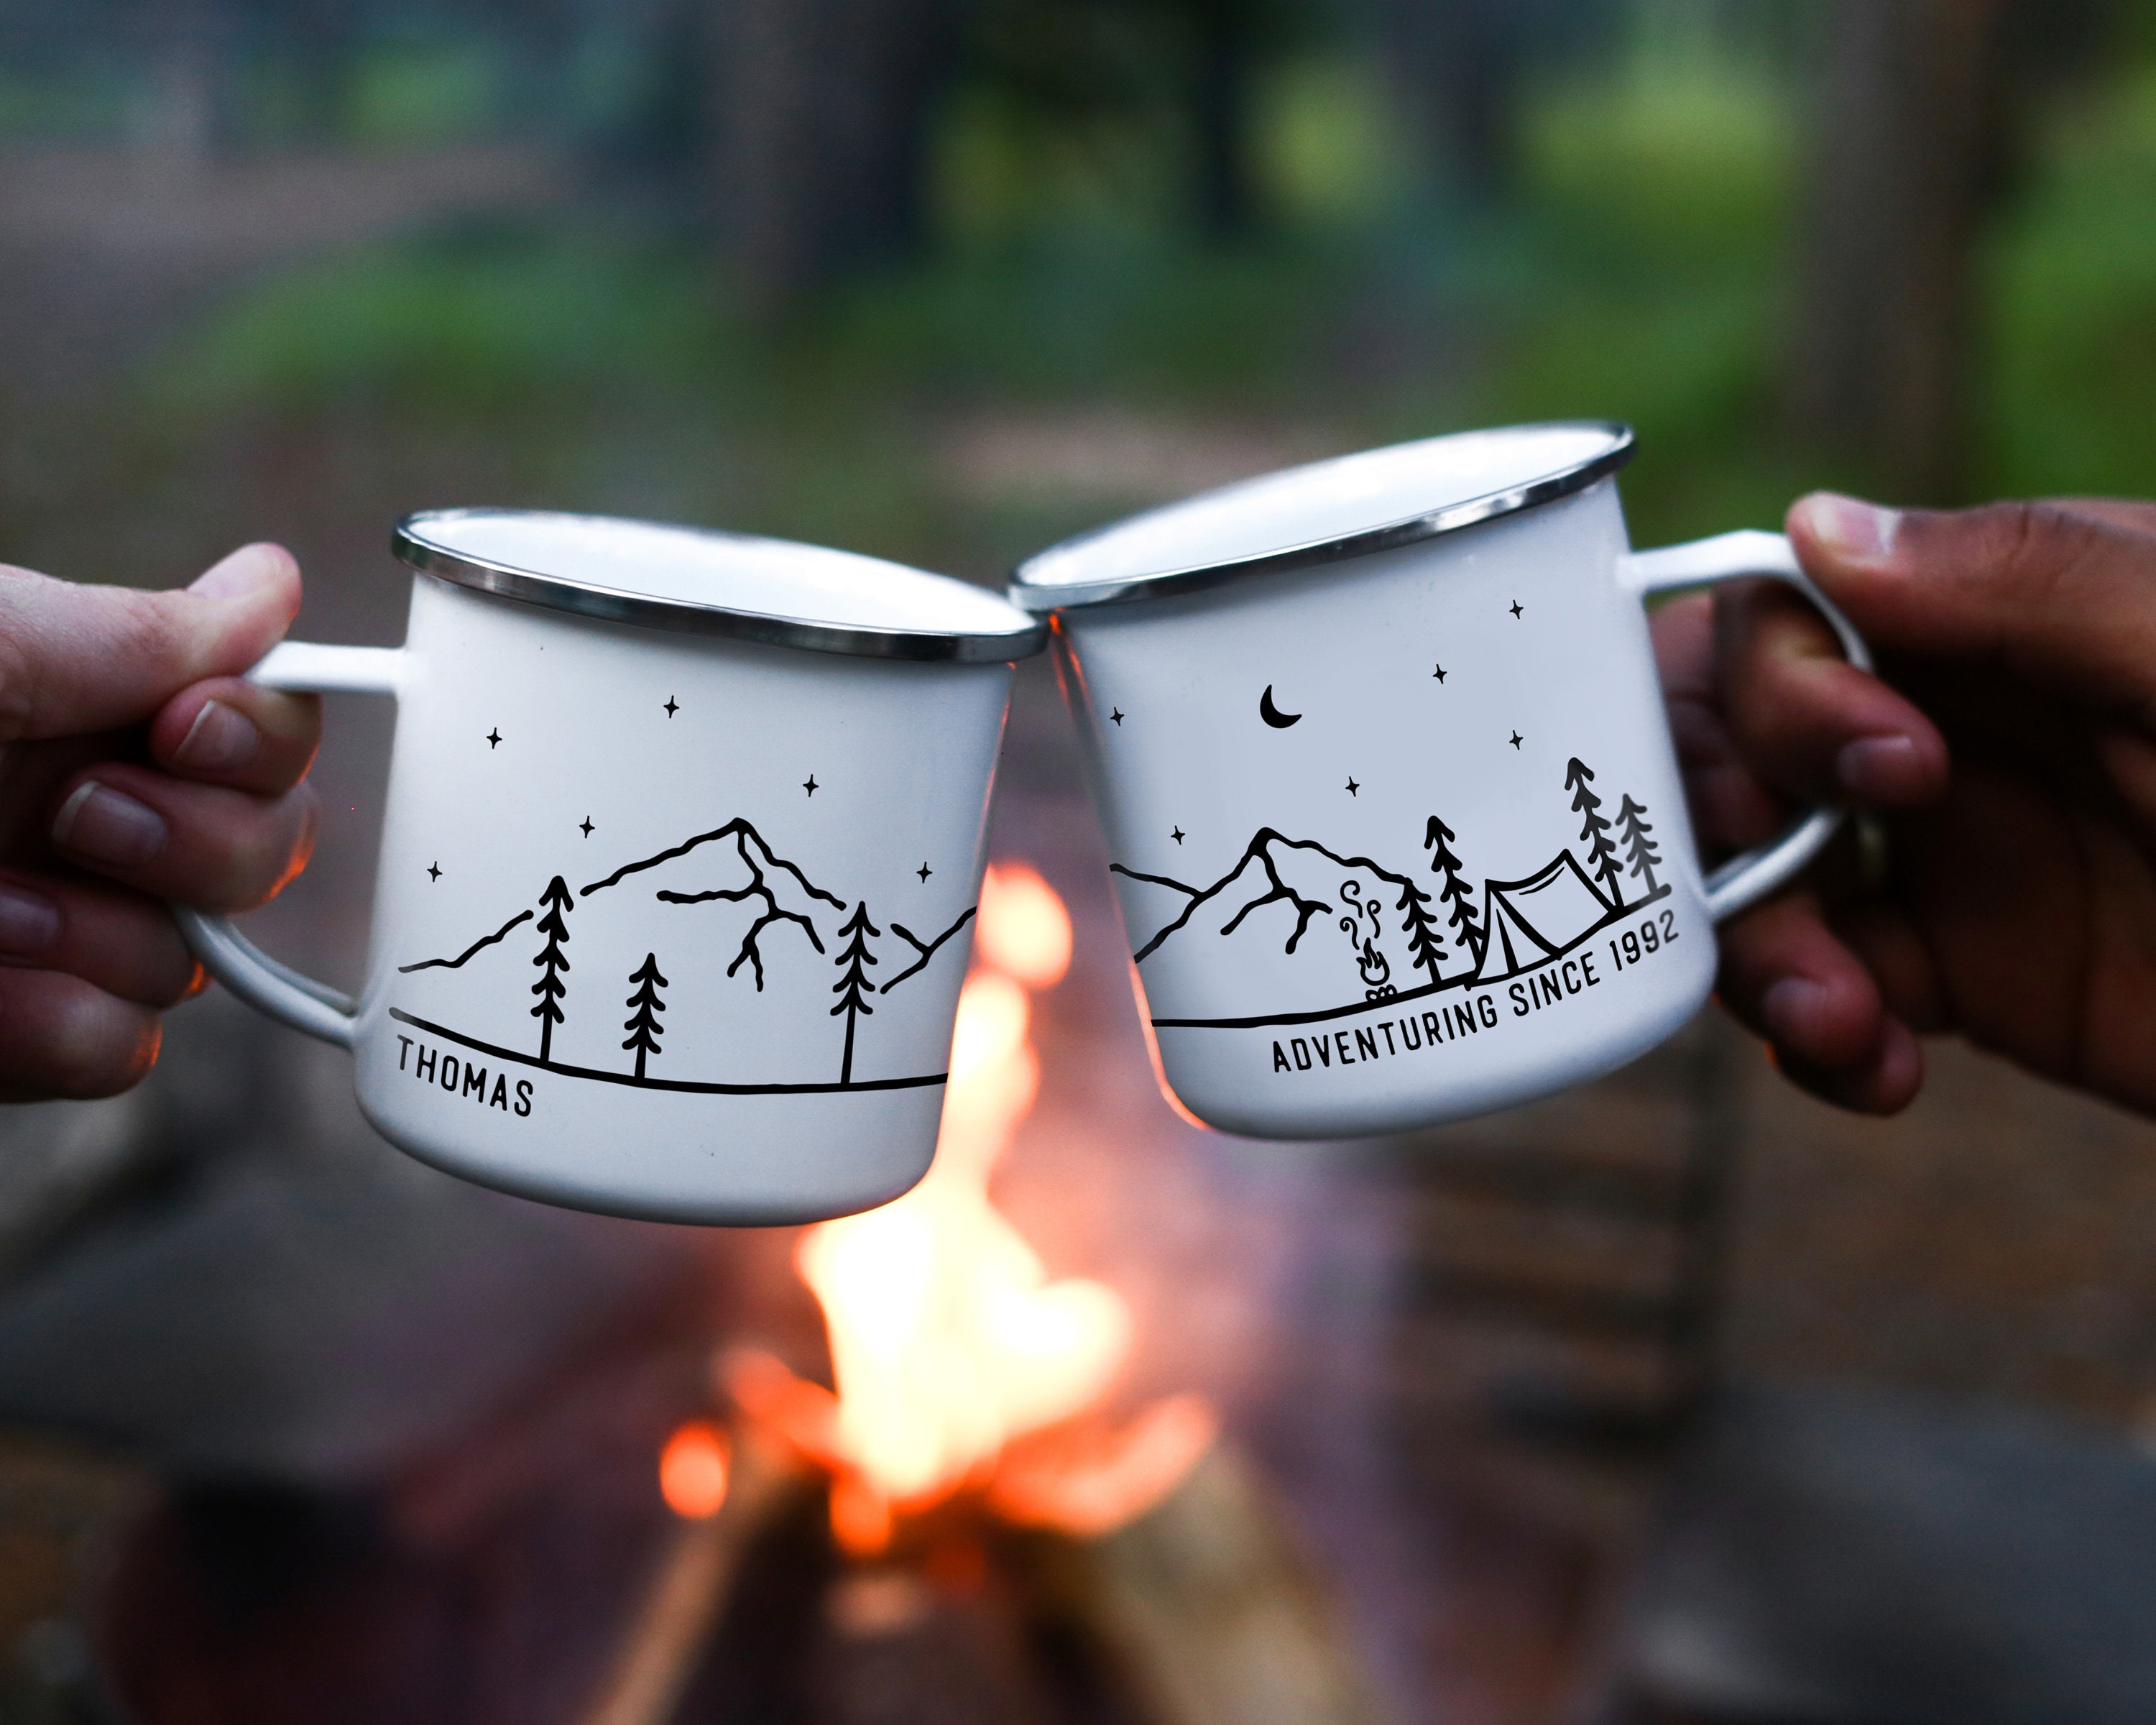 ONE MUG Personalised Kayak Mug Kayaking Gift For Couples Campfire Mug Engagement Mountain Wedding Mug Kayak Coffee Mug Canoeing Gift Mug